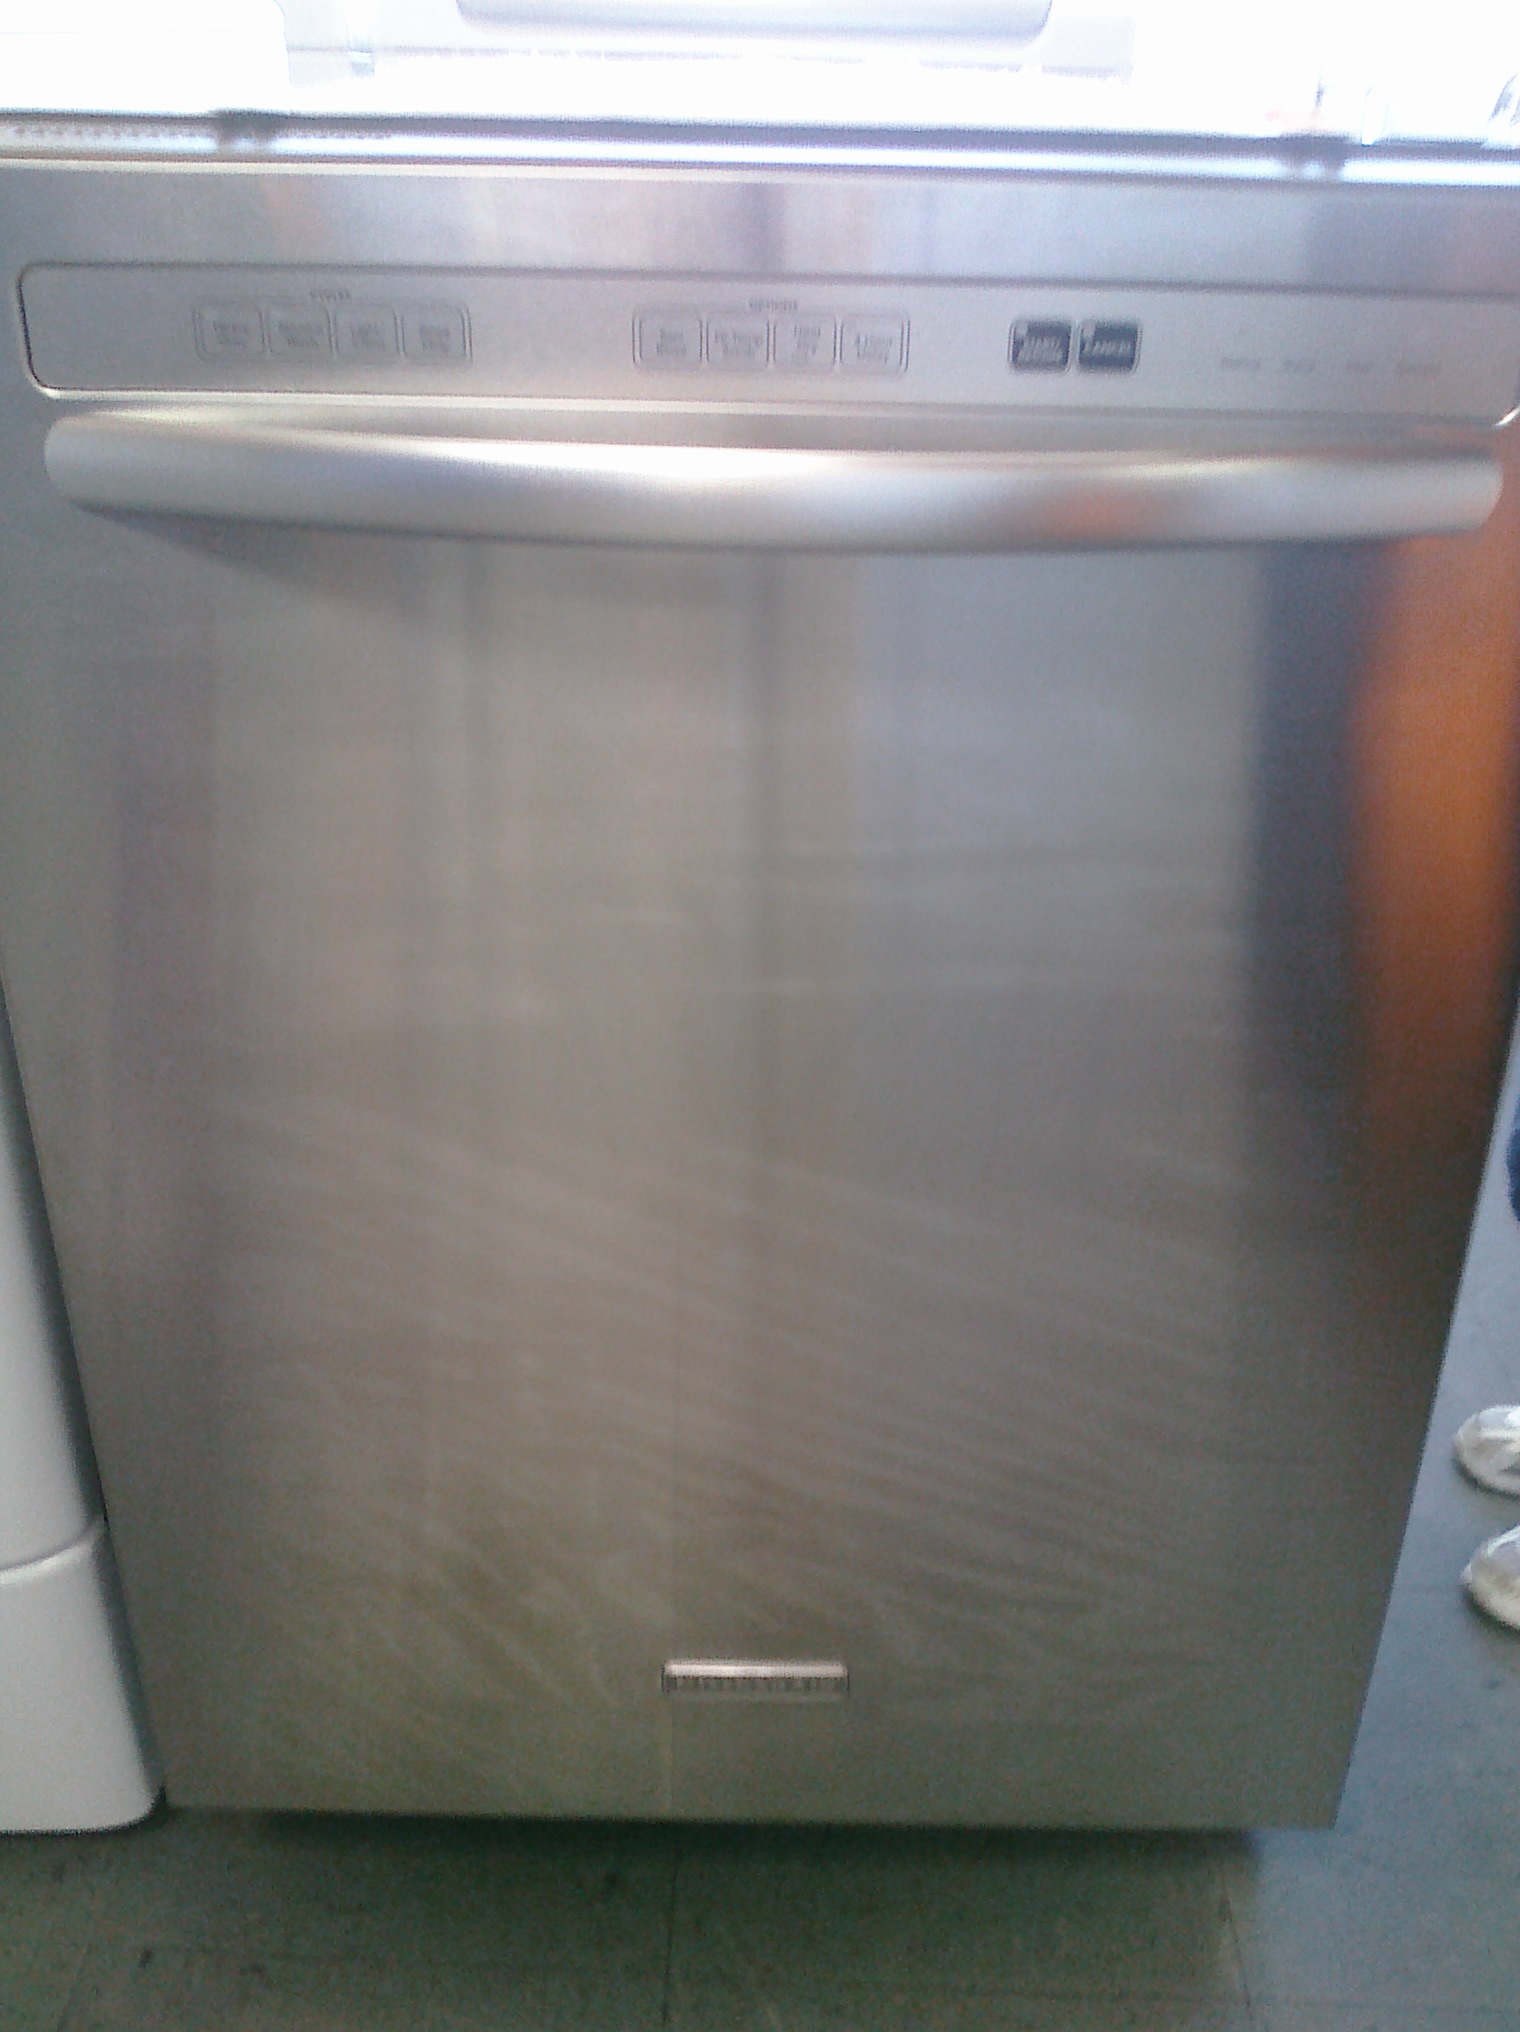 (9) KitchenAid KUDC20CVSS 24″ Built-In Dishwasher, Stainless Steel